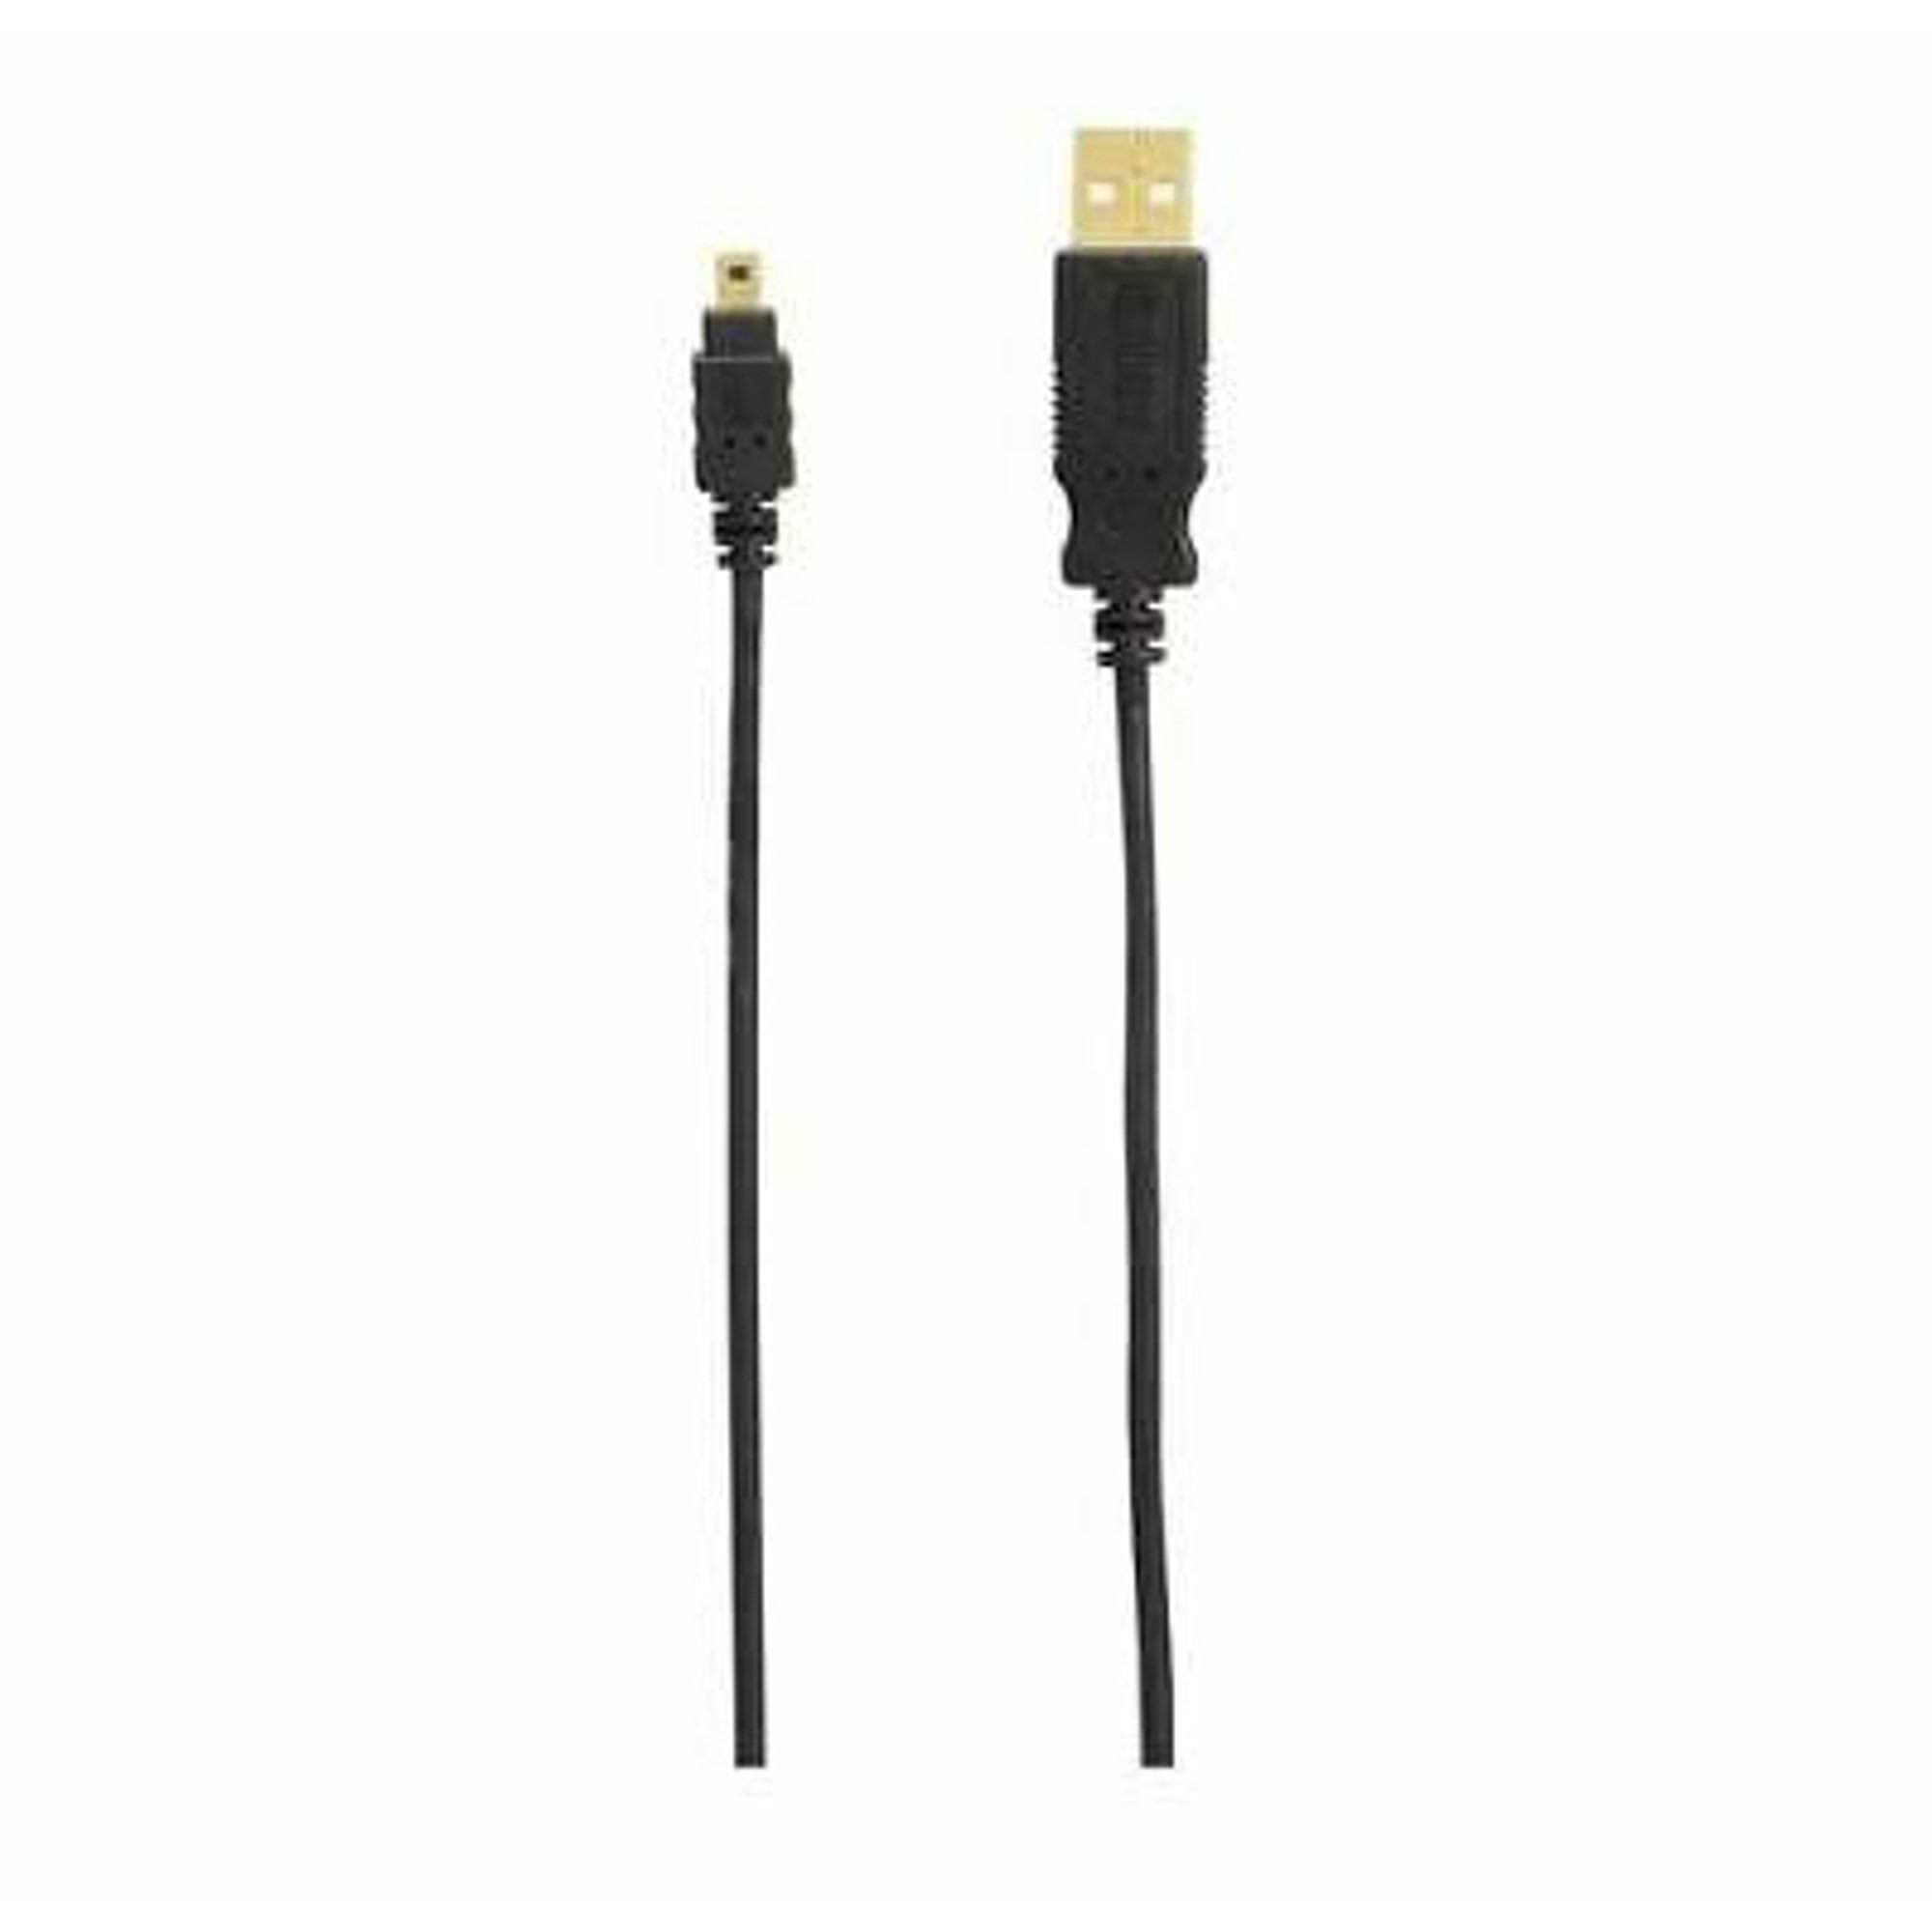 Gigaware USB A to Mini USB B Male Cable - Black, 6', 8 Pin